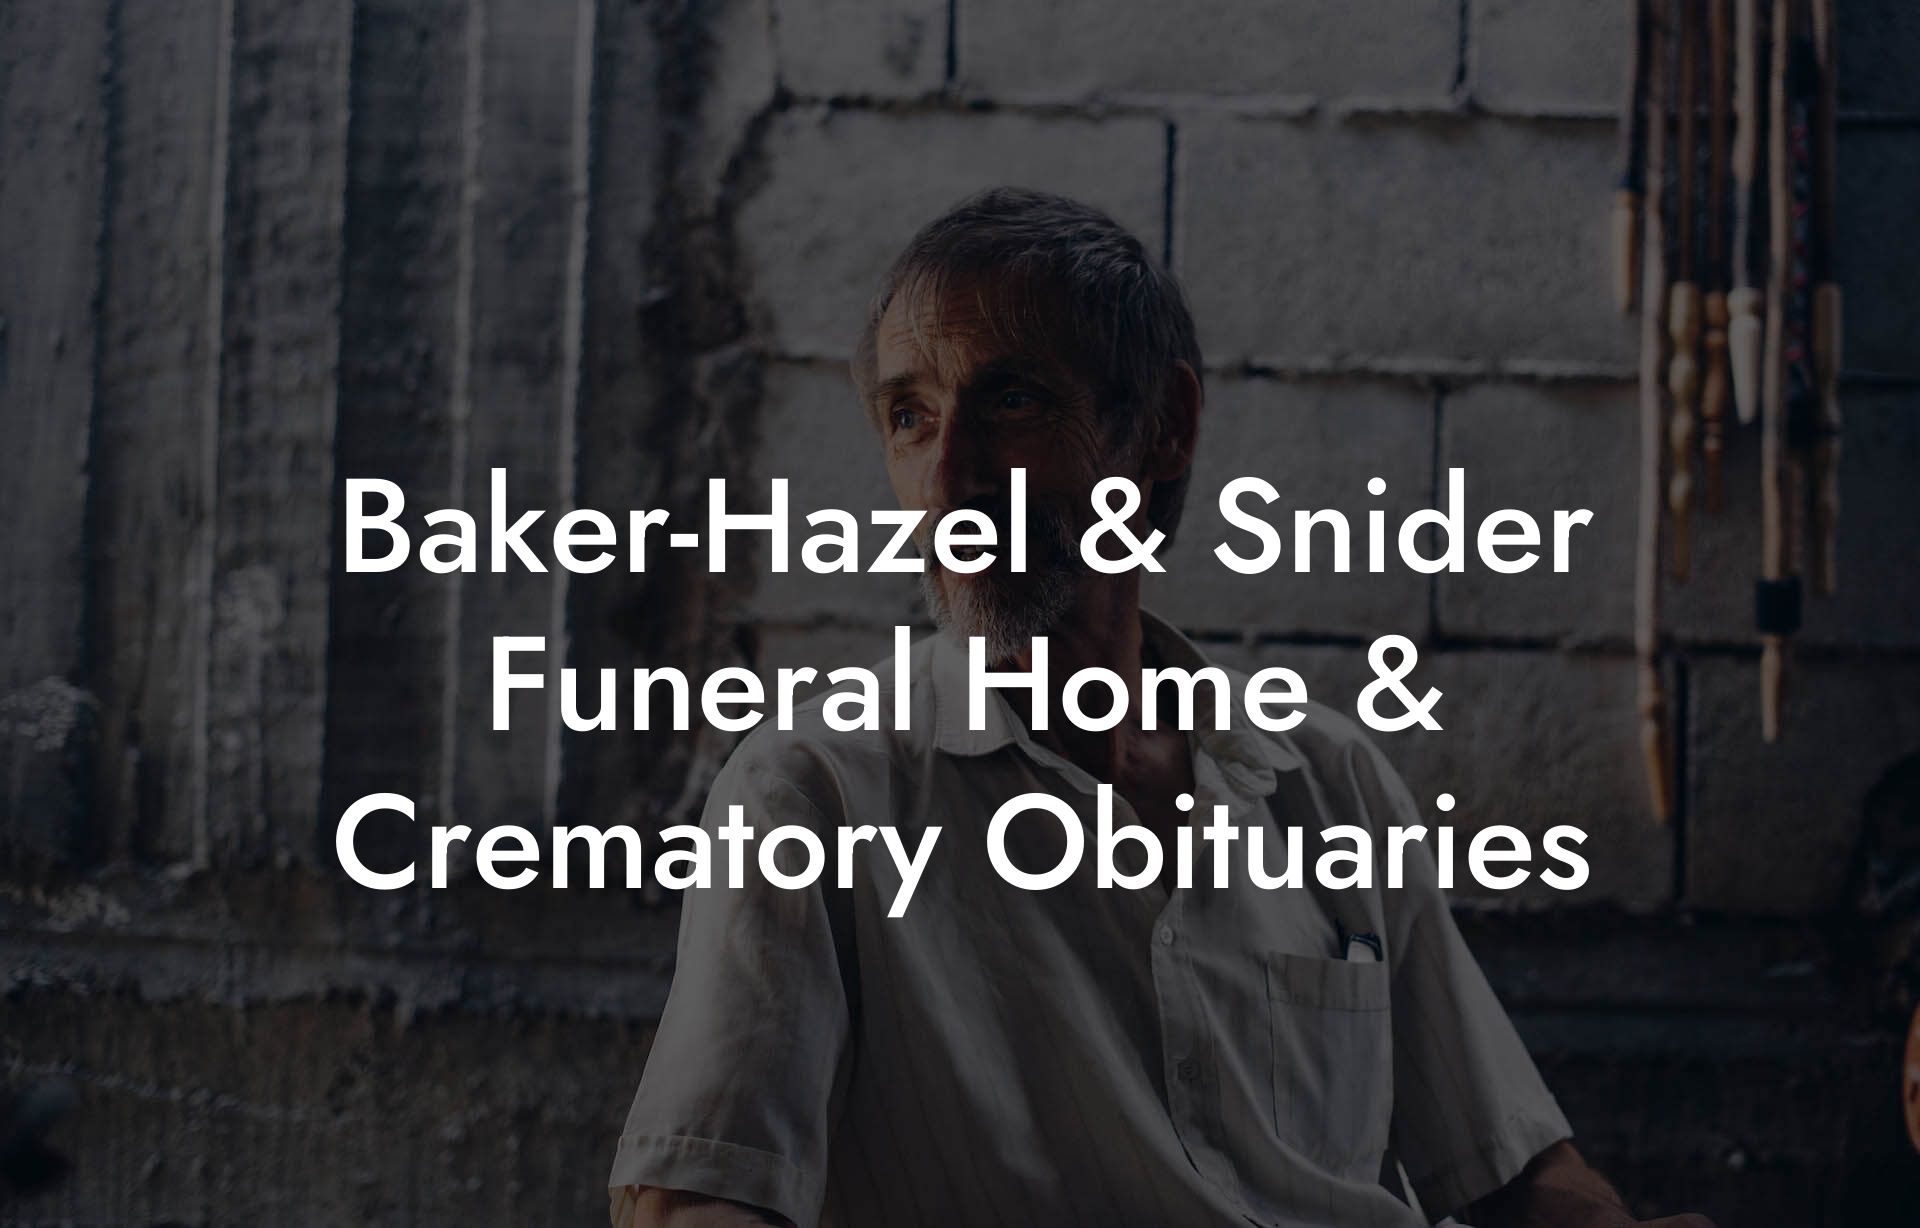 Baker-Hazel & Snider Funeral Home & Crematory Obituaries